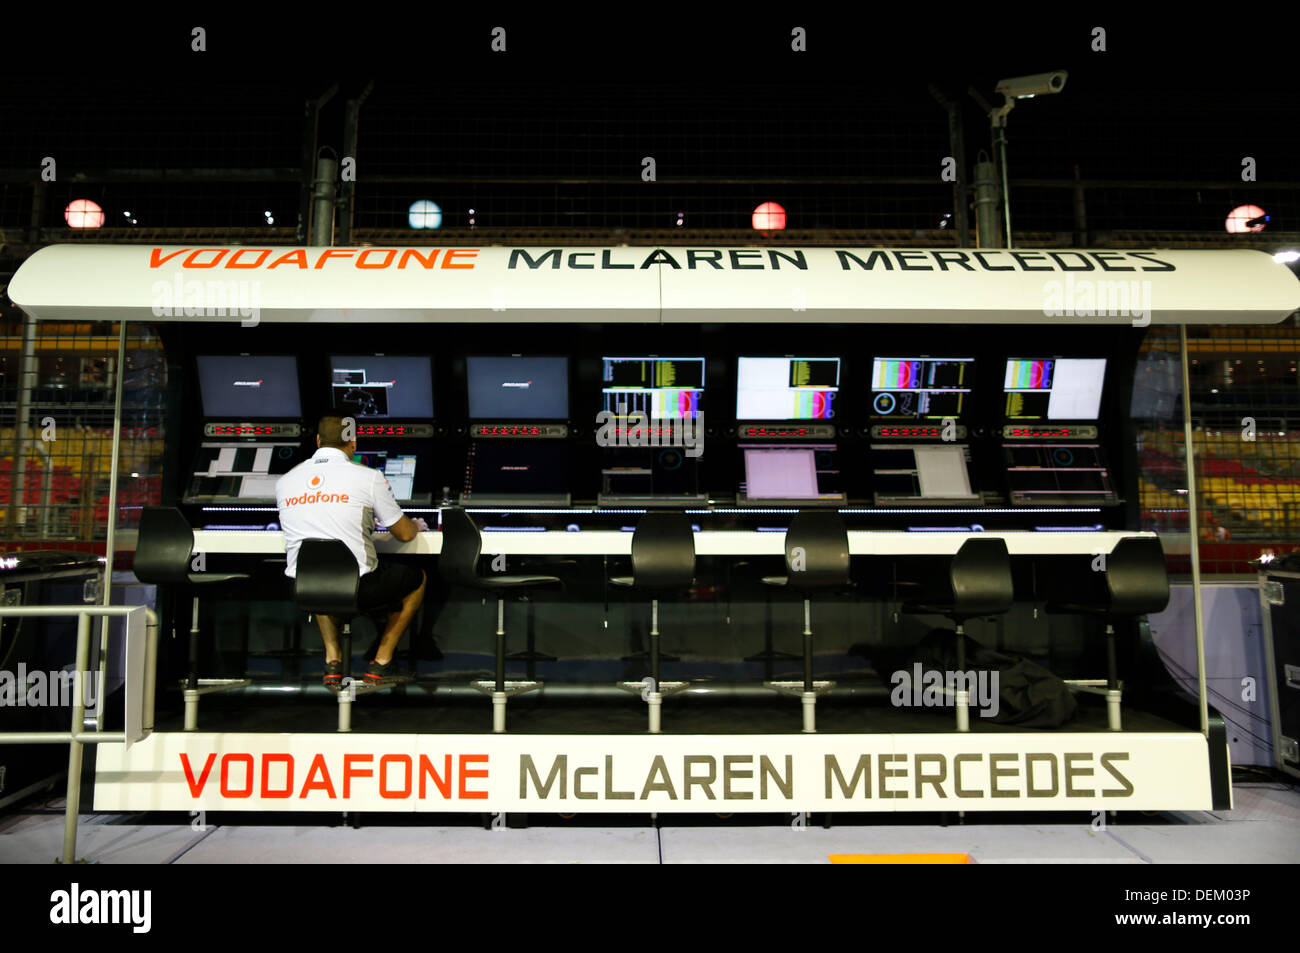 Singapur. 20 de septiembre de 2013. Automovilismo: Campeonato del Mundo de Fórmula Uno FIA 2013, Gran Premio de Singapur, muro de Vodafone McLaren Mercedes Crédito: dpa picture alliance/Alamy Live News Foto de stock